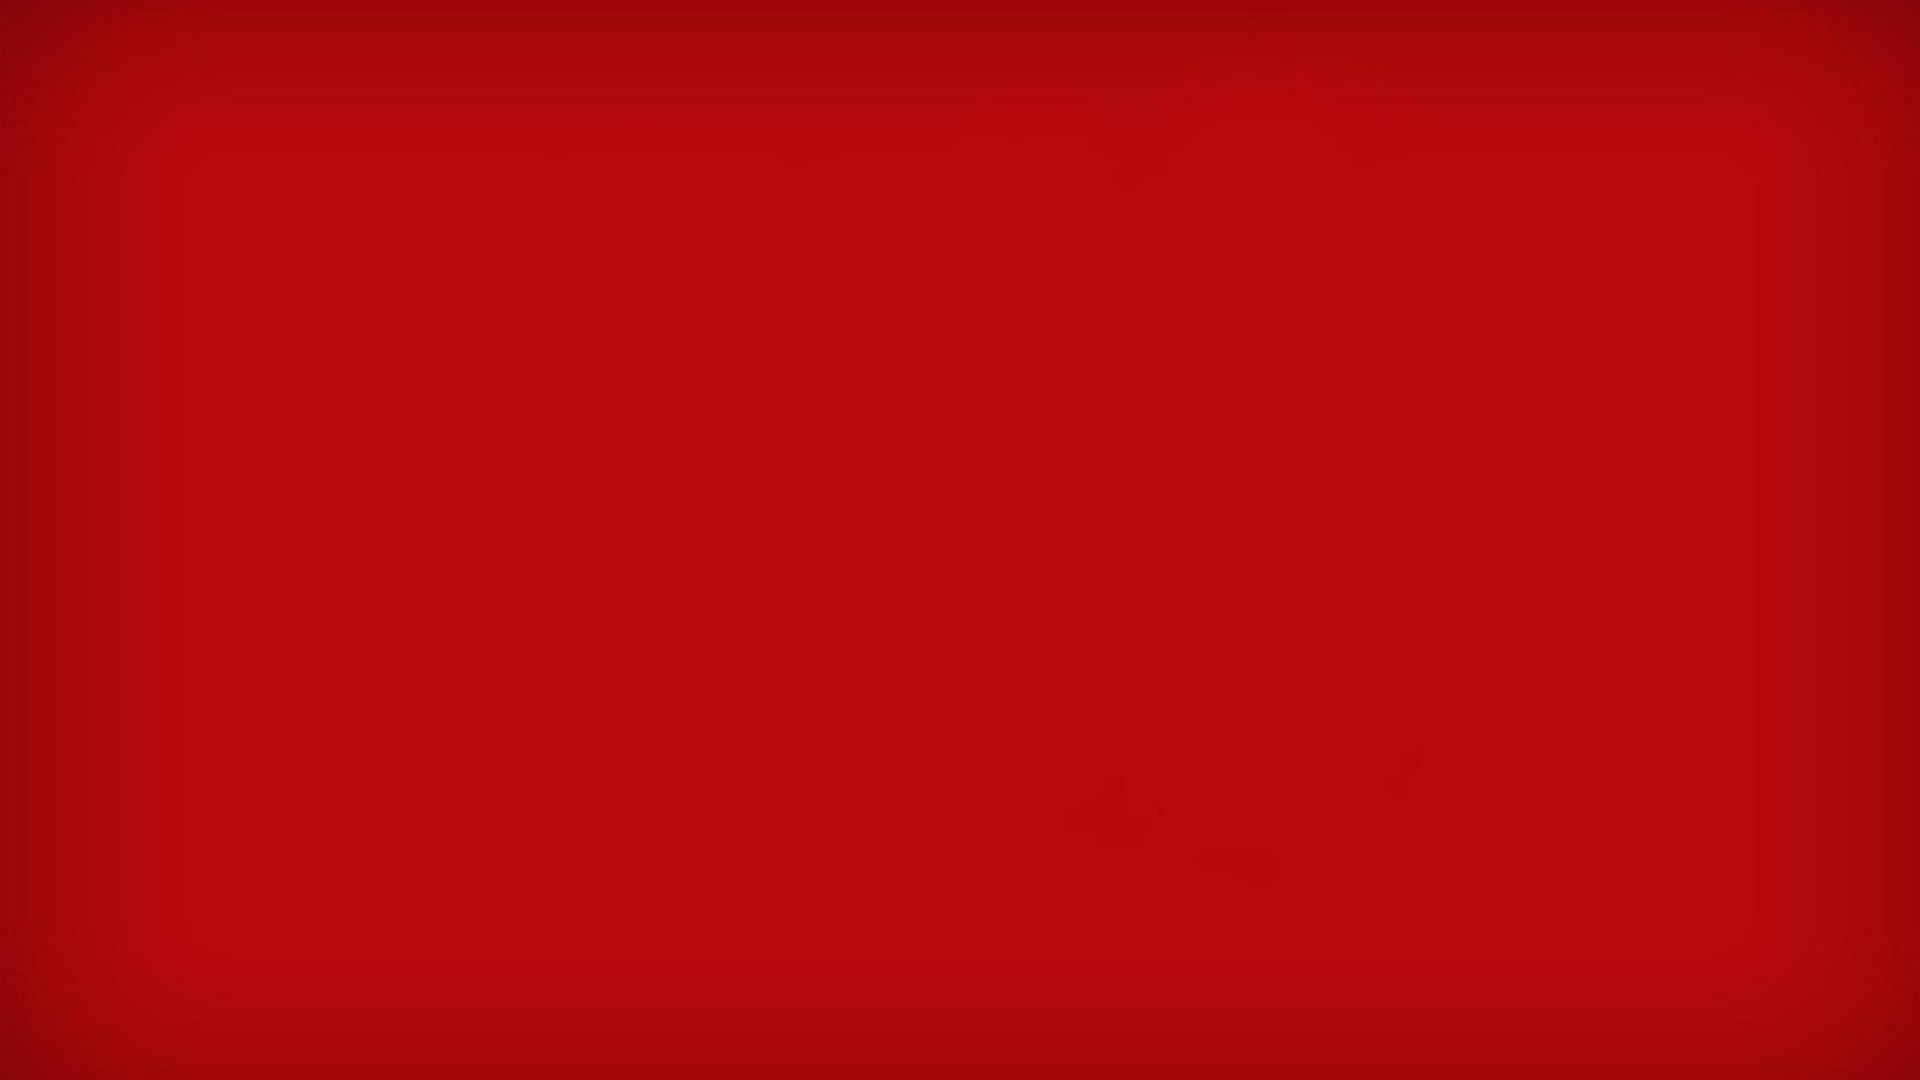 1920x1080 Red Wallpaper Hd Plain wallpaper | Red colour wallpaper, Red wallpaper, Red background images